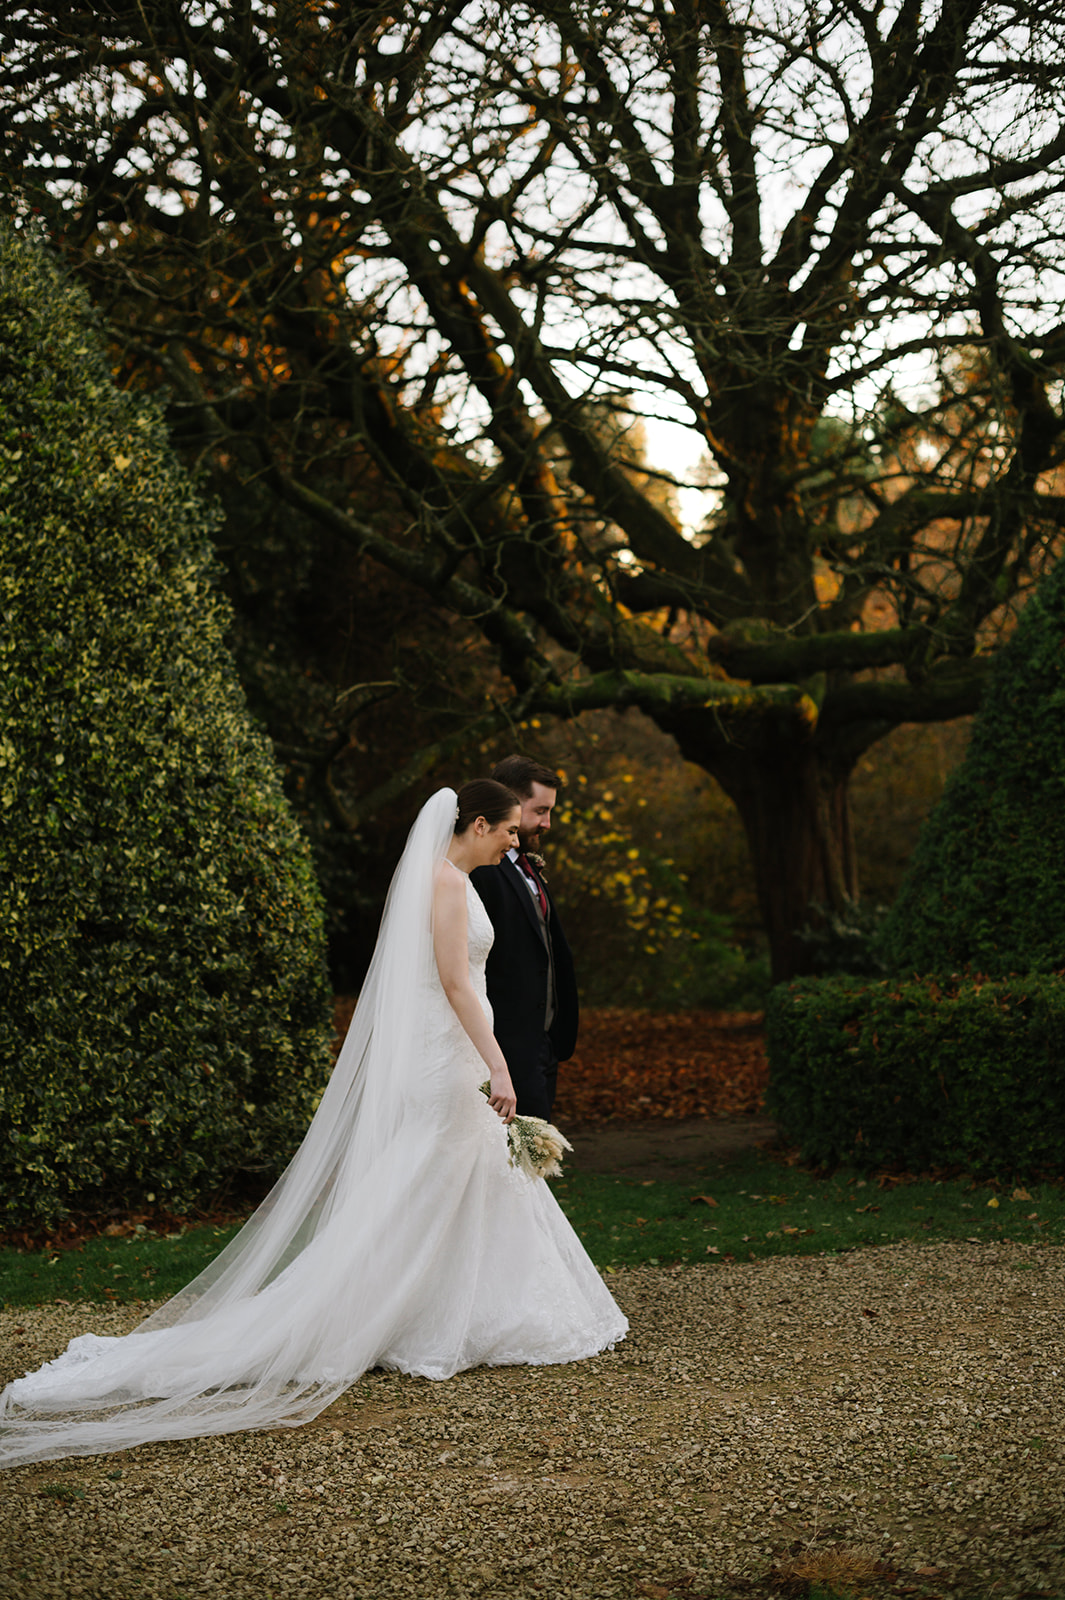 the bride and groom walking in the garden at highbury hall, Birmingham